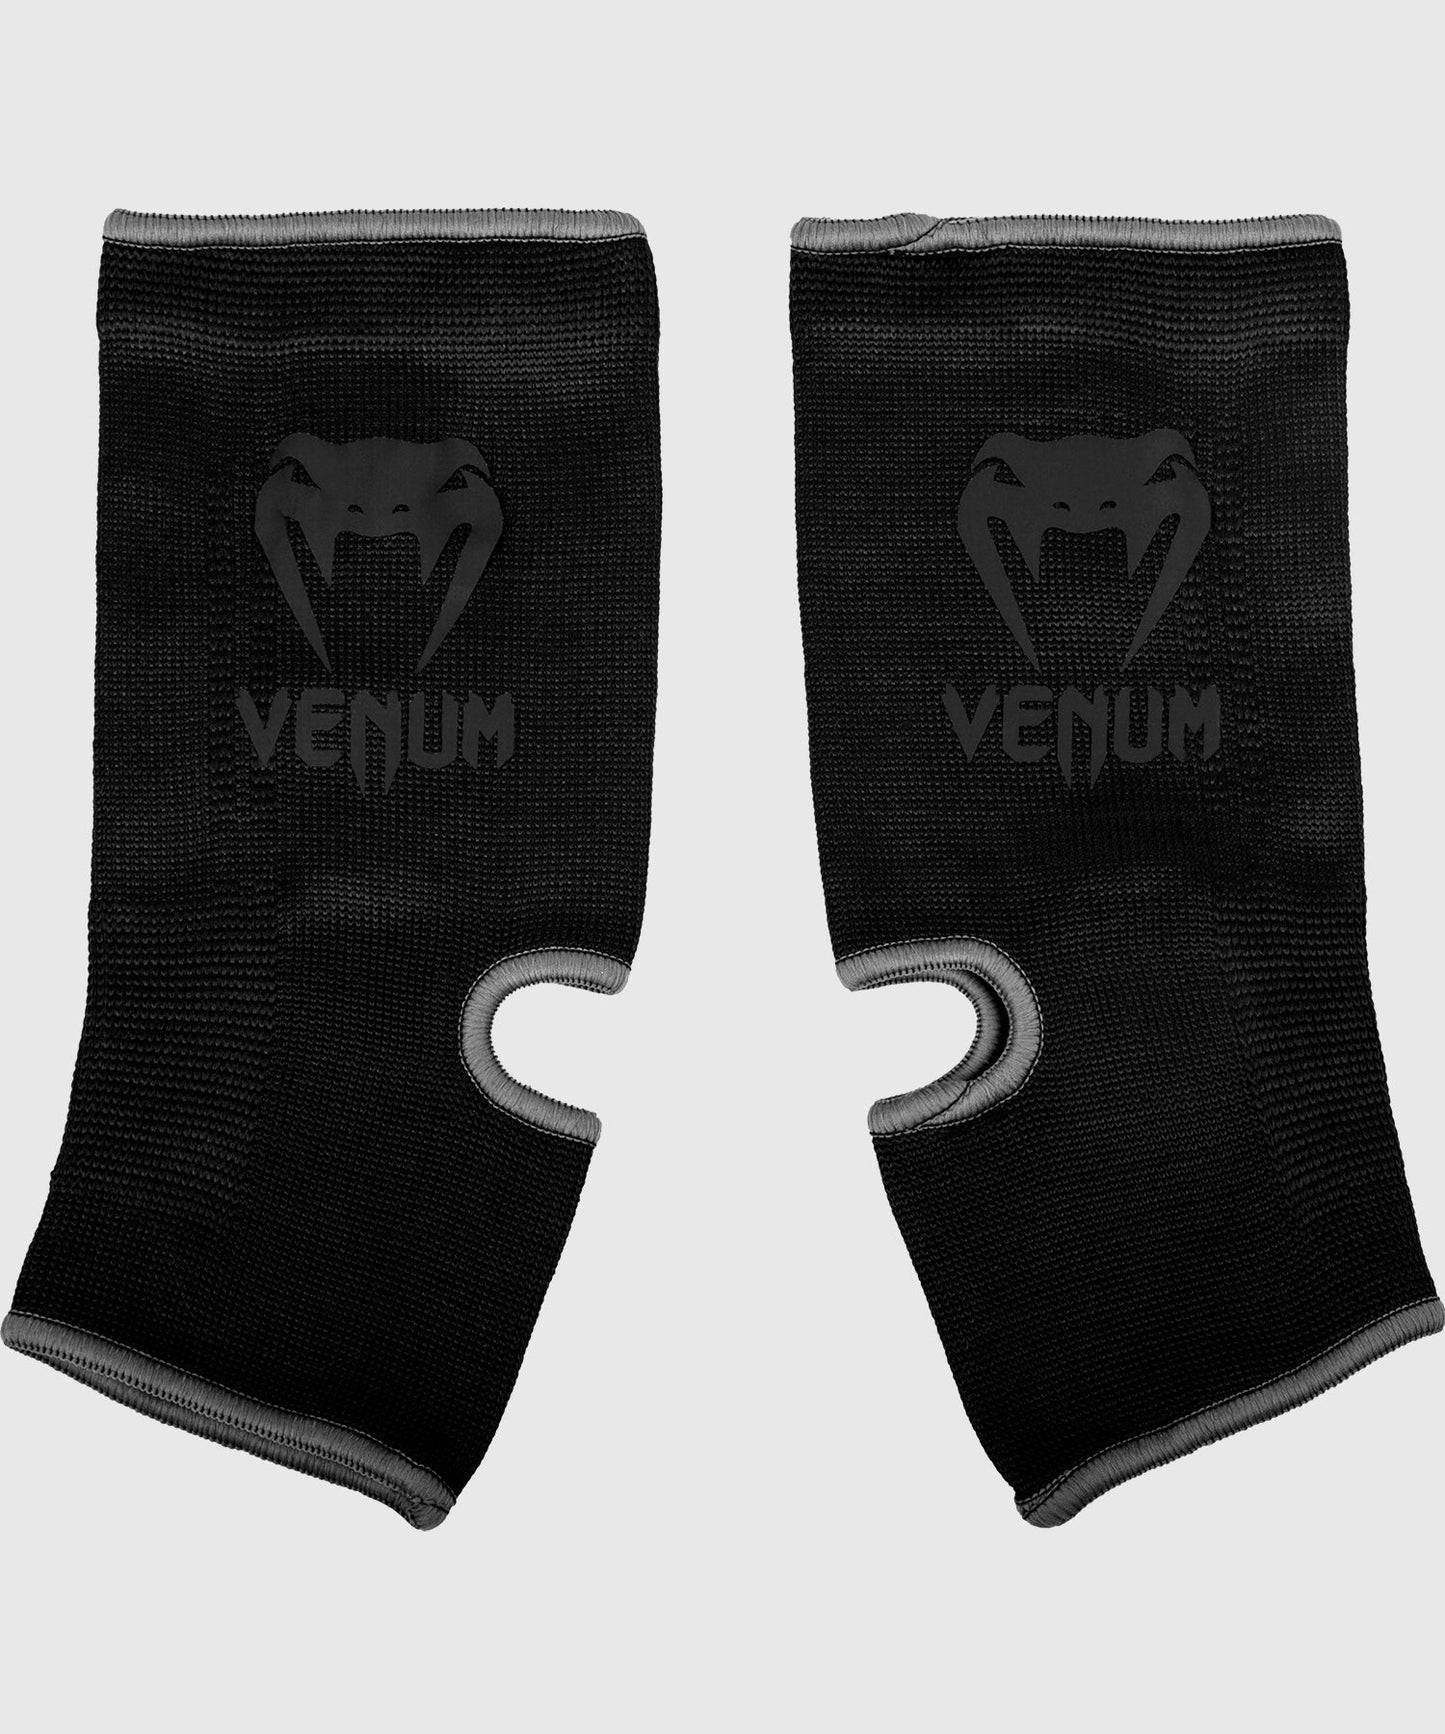 Venum Kontact Ankle Support Guards - Black/Black